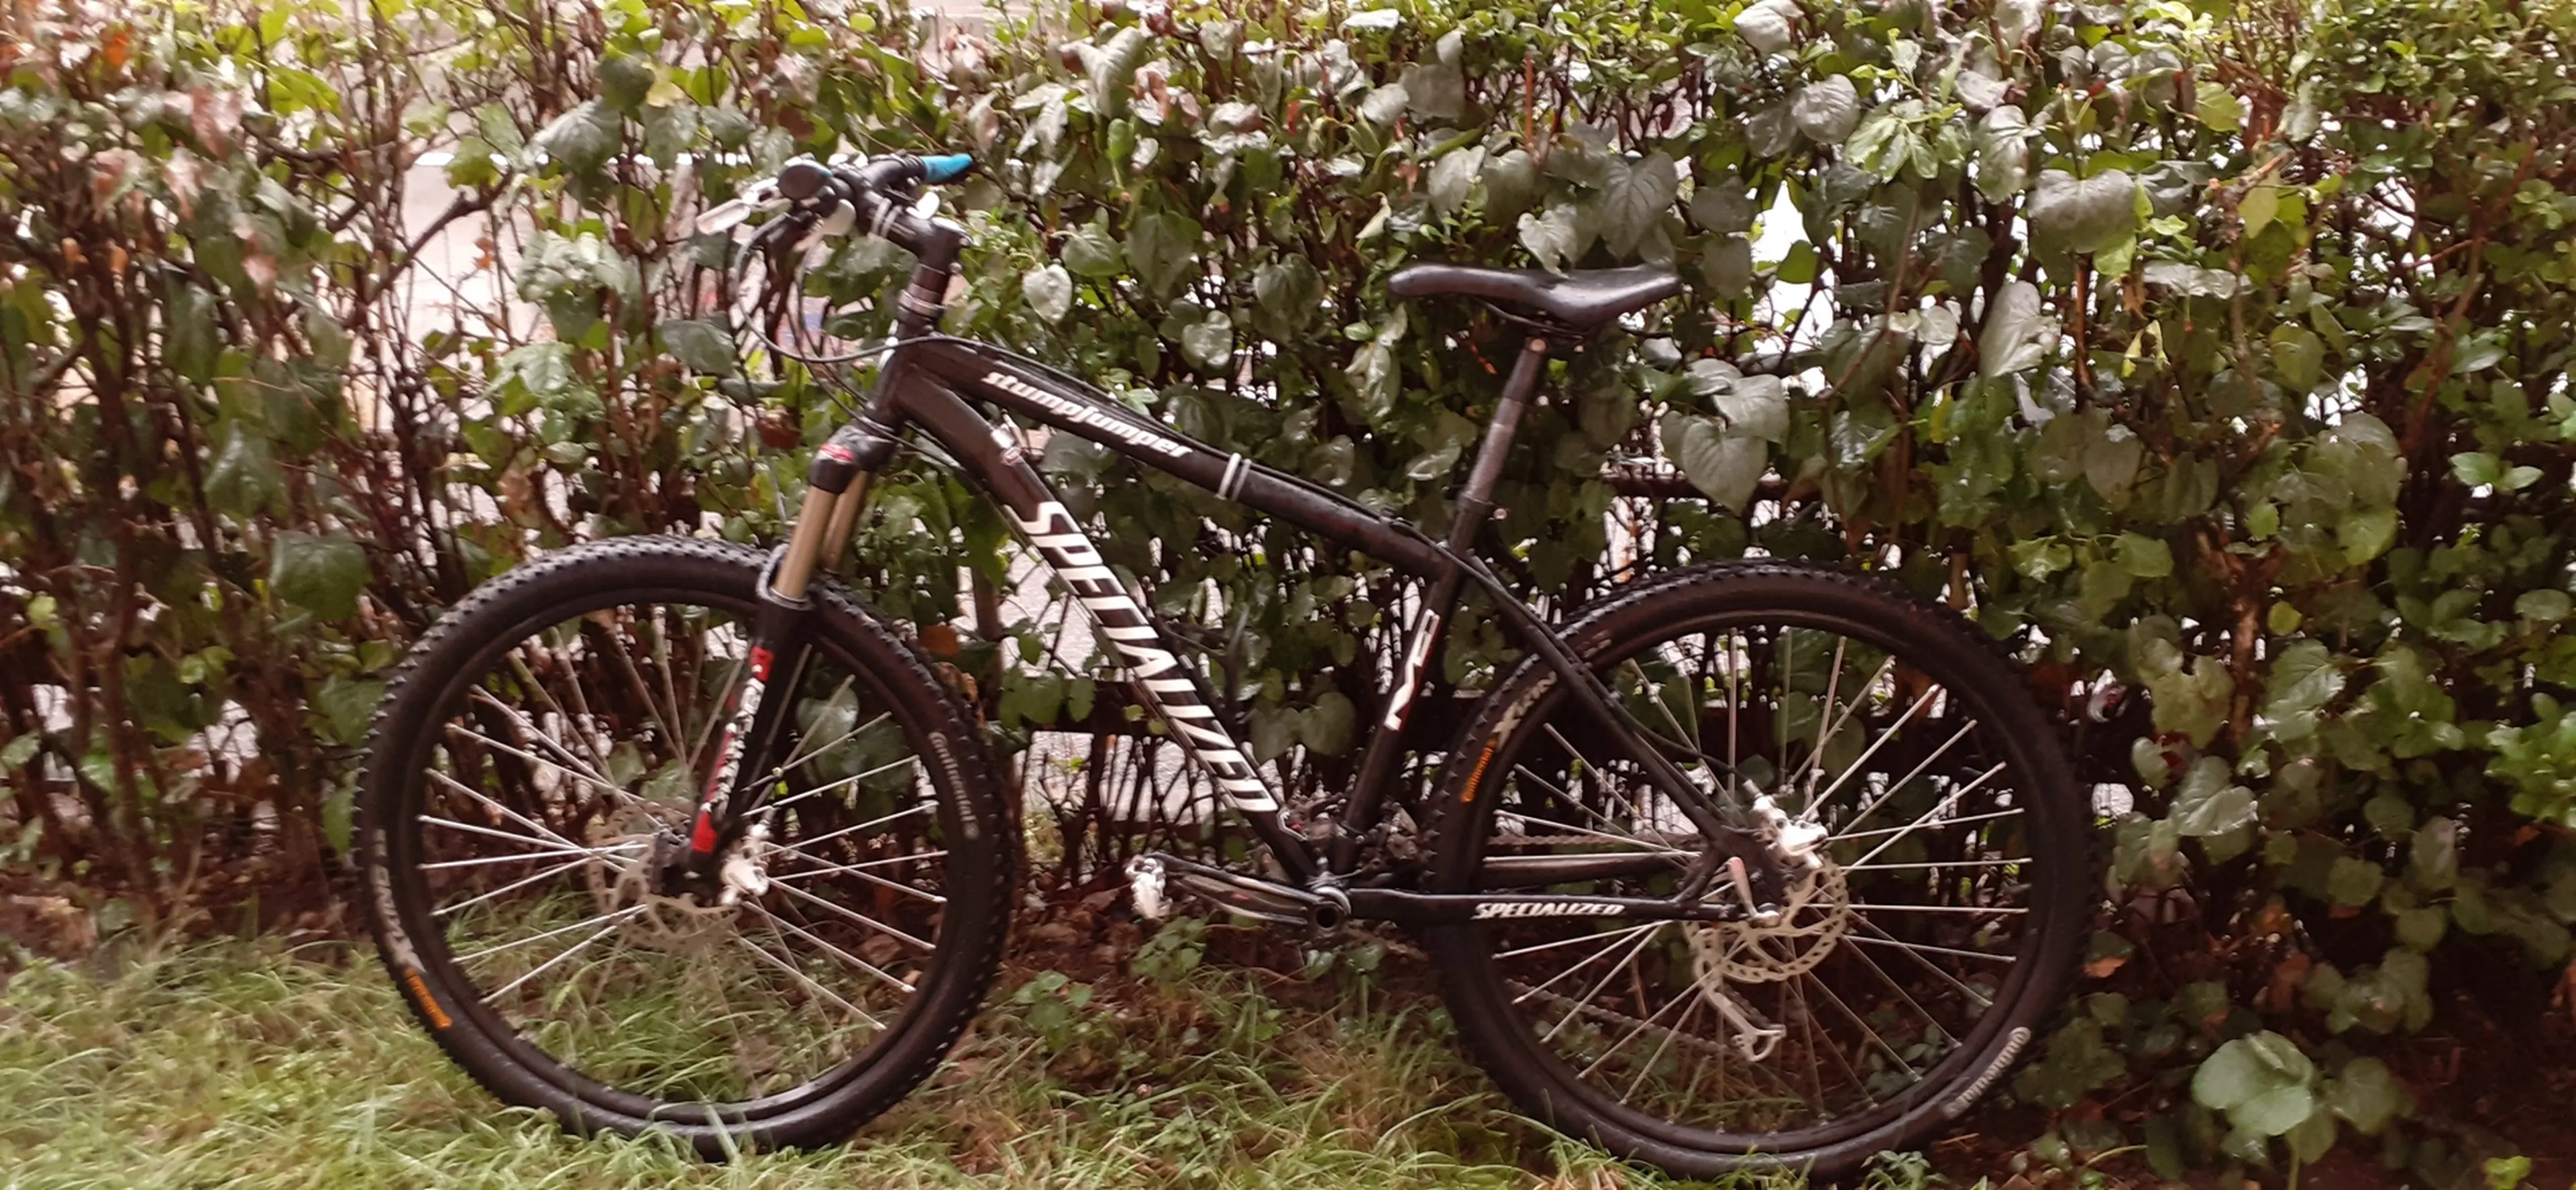 Image Vand bicicleta Sepecialized Stumpjumper 26''